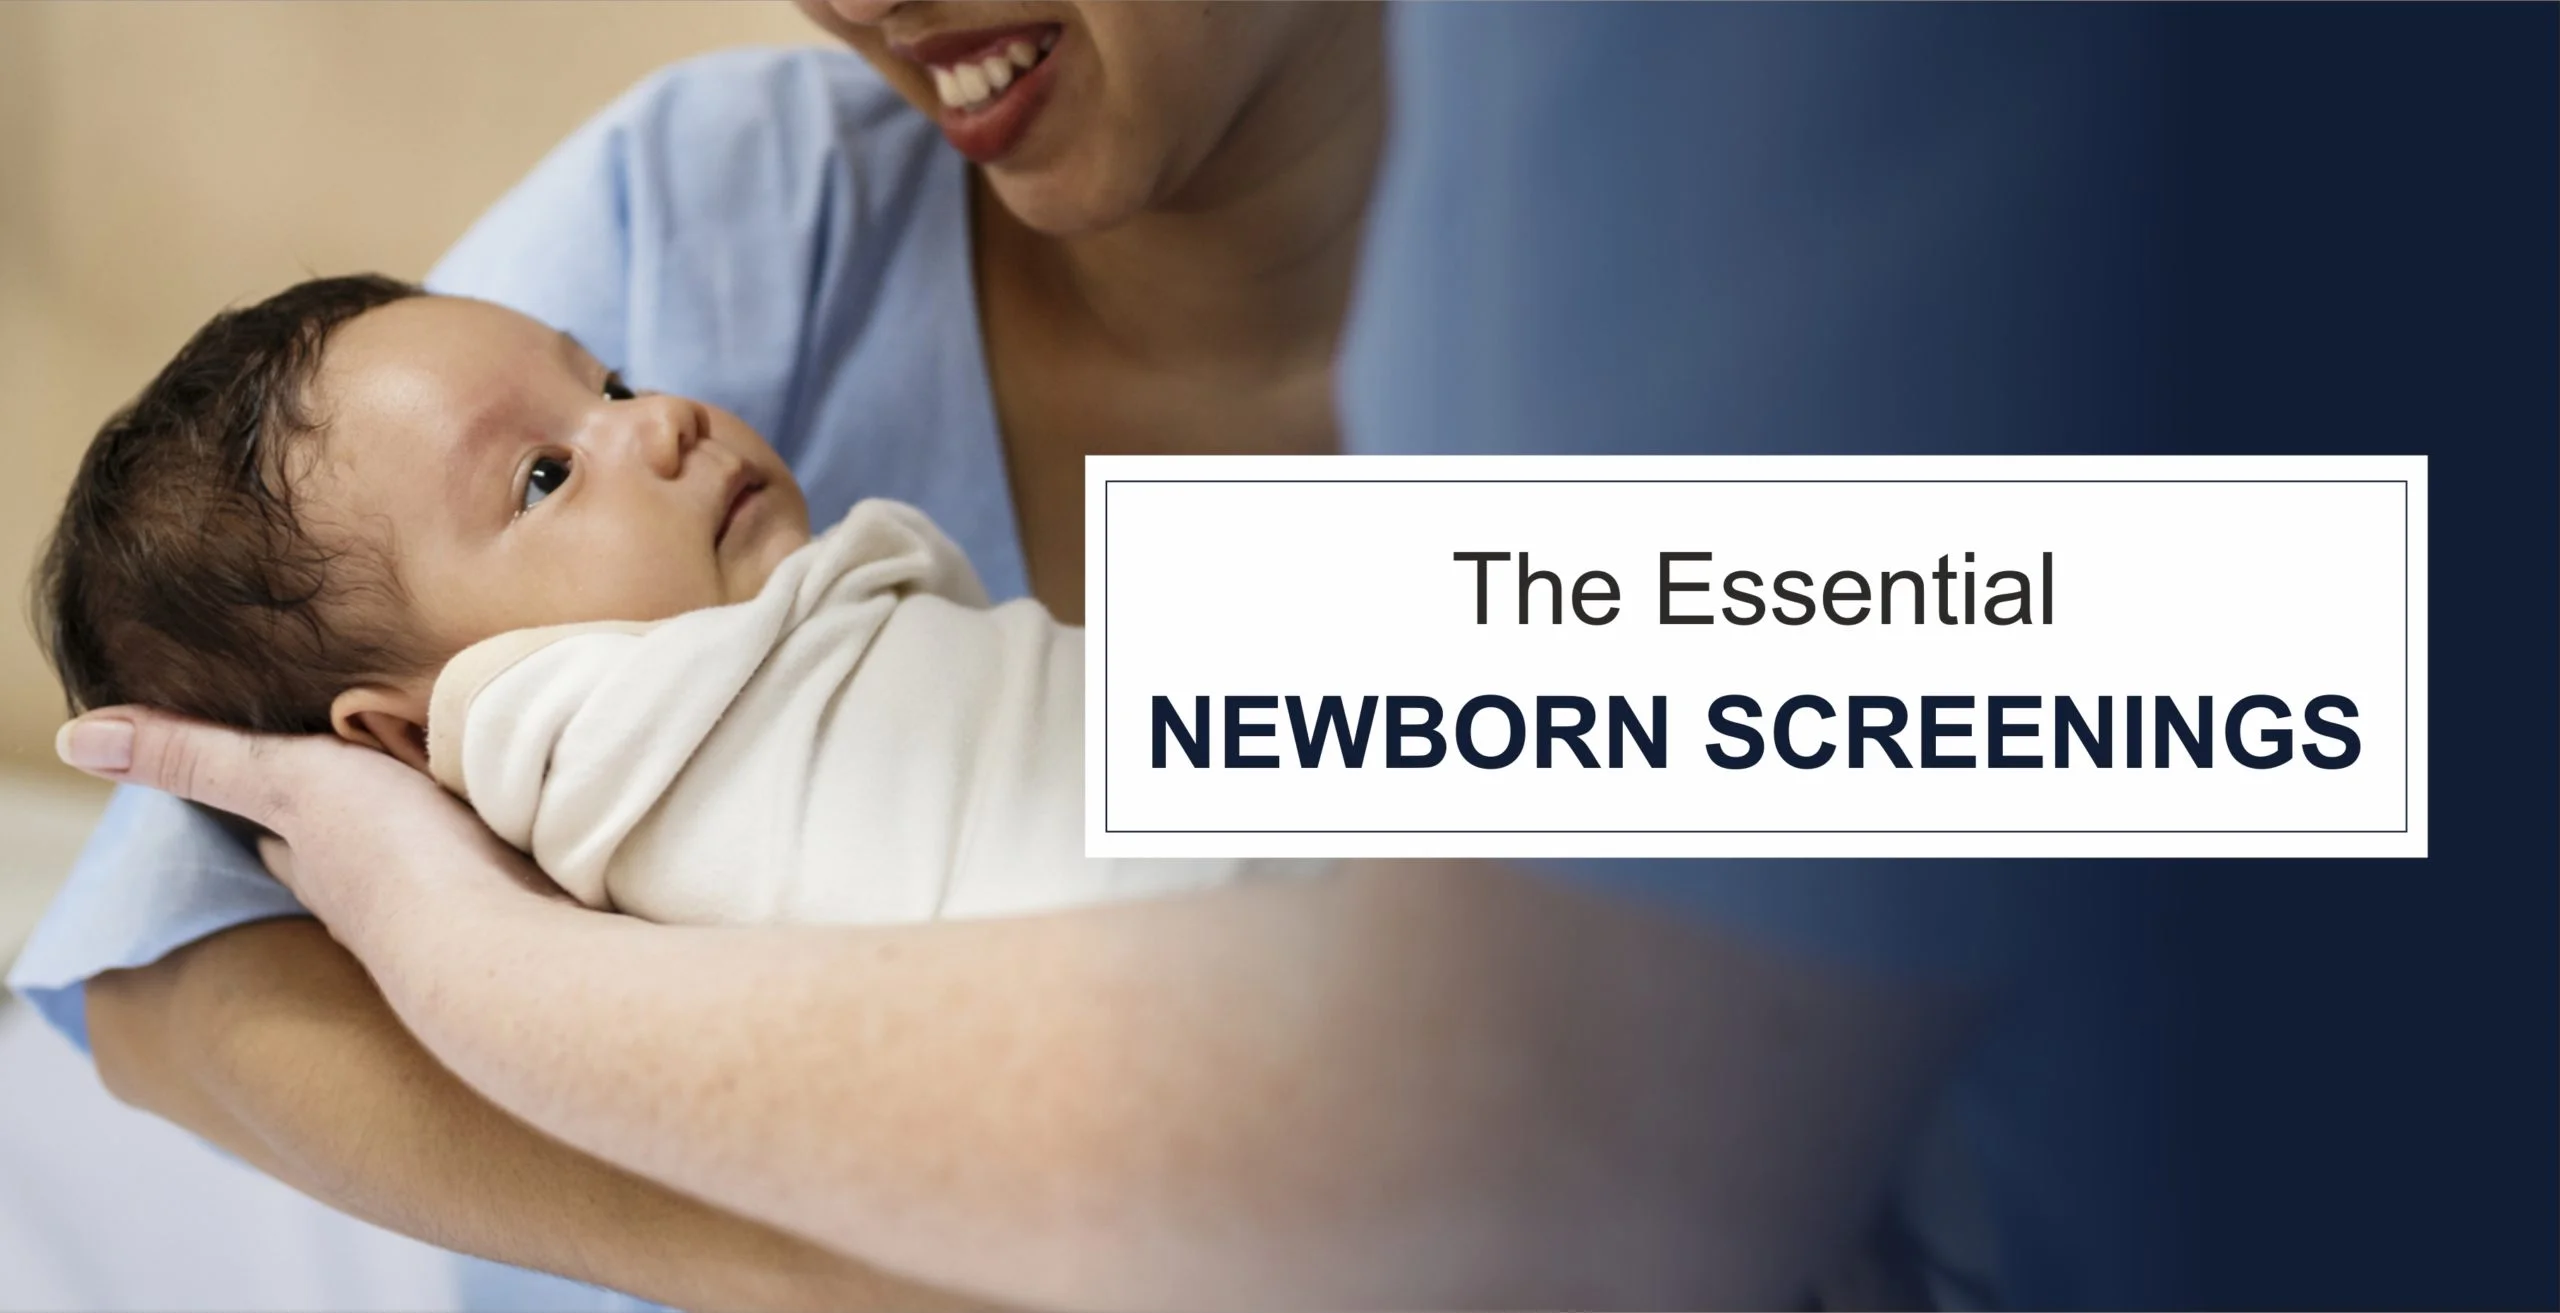 https://www.miracleshealth.com/assets/blog/assets/uploads/blog/The-essential-newborn-screenings